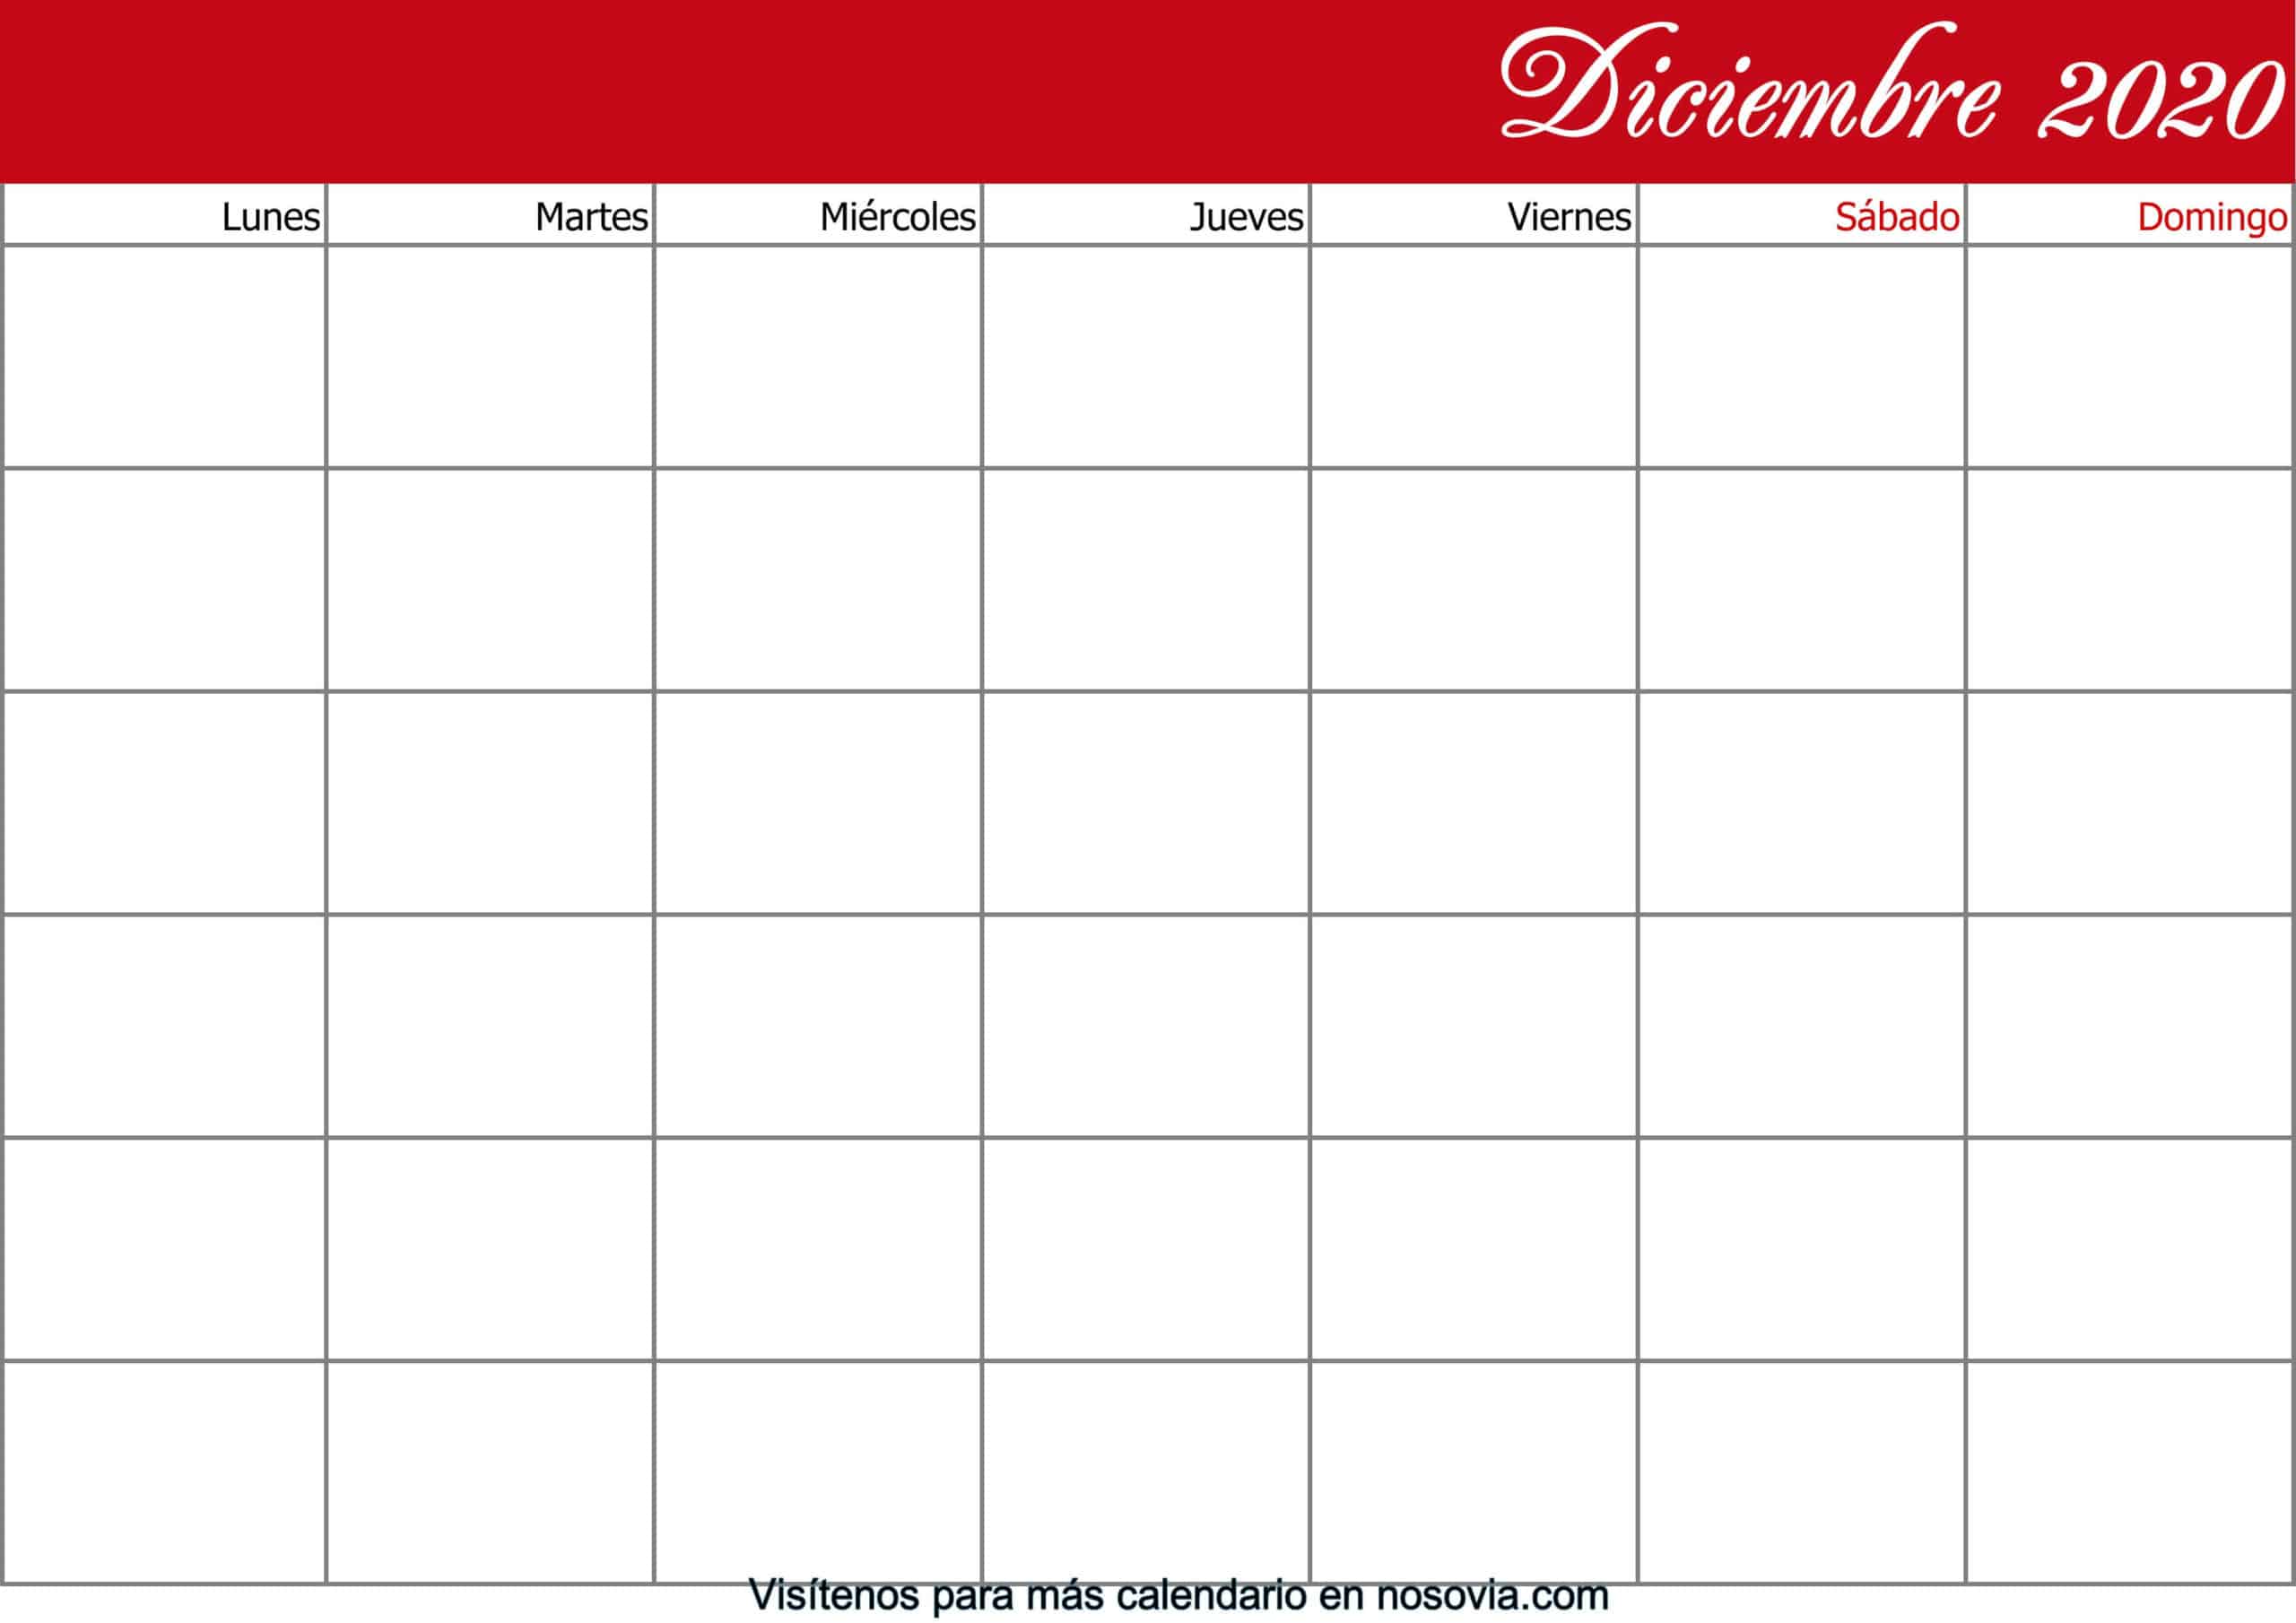 Calendario-diciembre-2020-en-blanco-imprimible-gratis